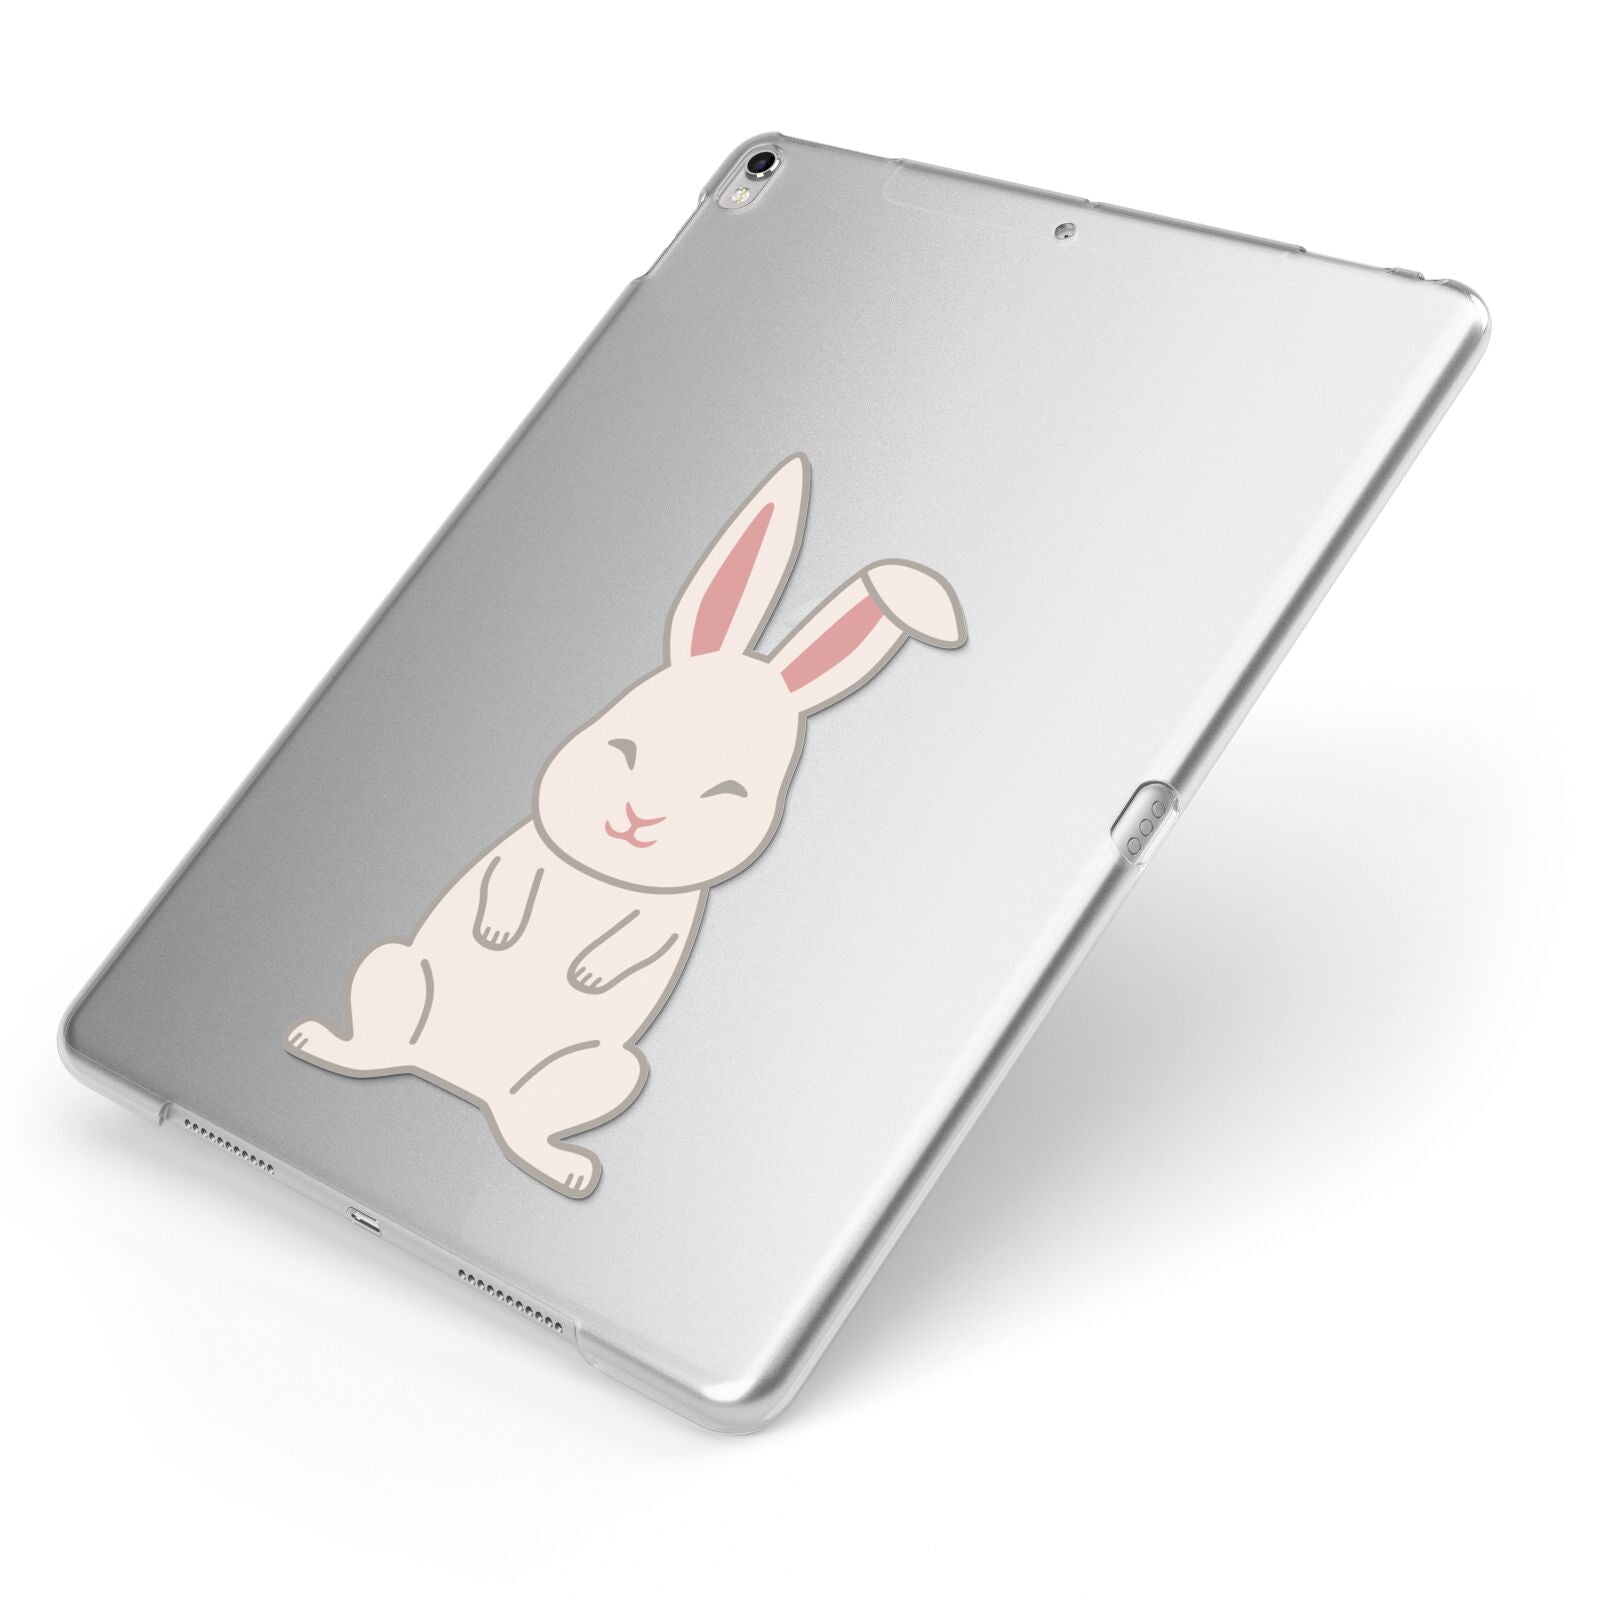 Bunny Apple iPad Case on Silver iPad Side View